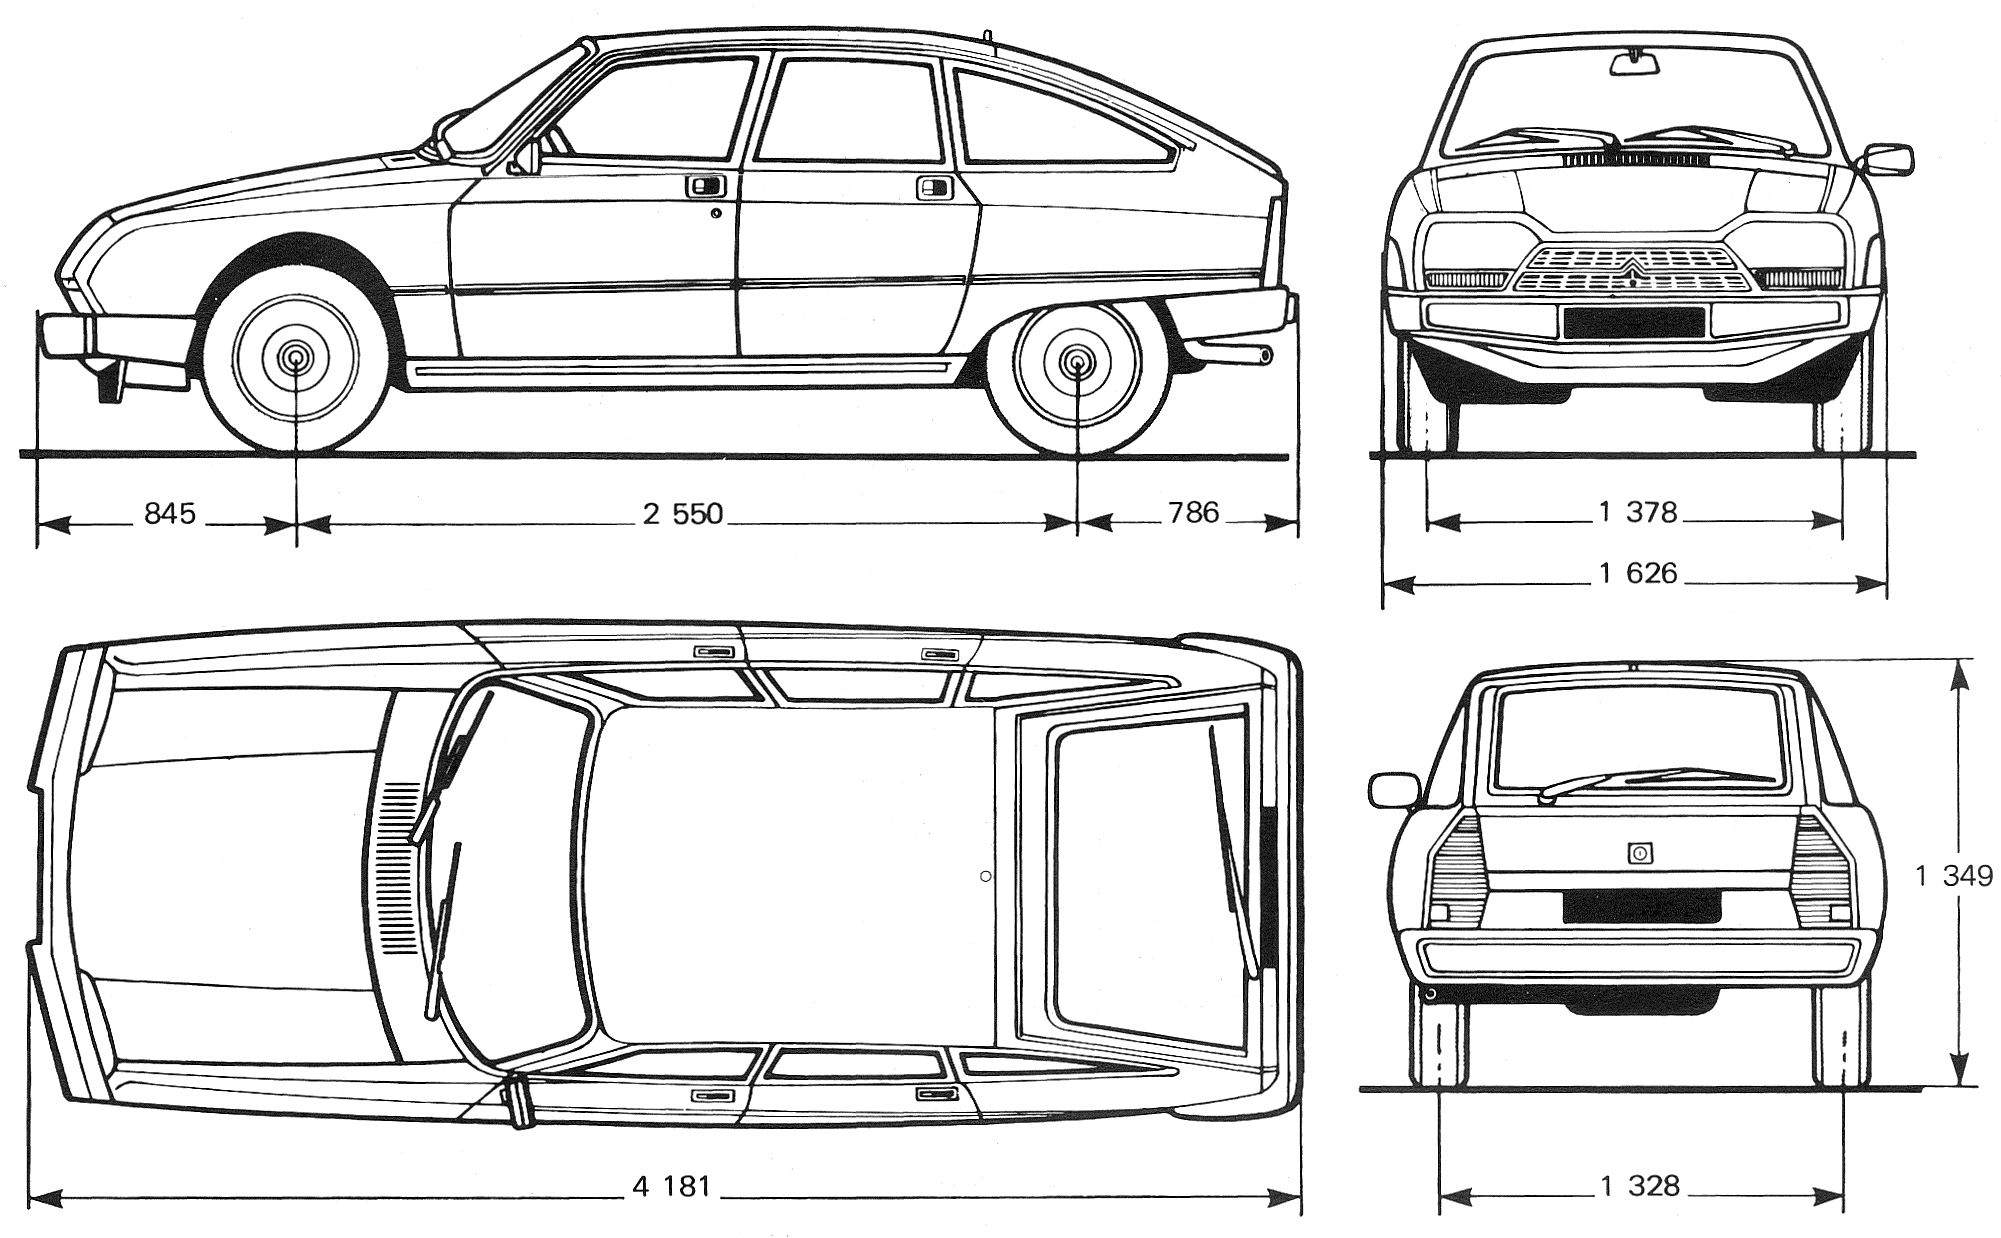 Citroën GSA blueprint